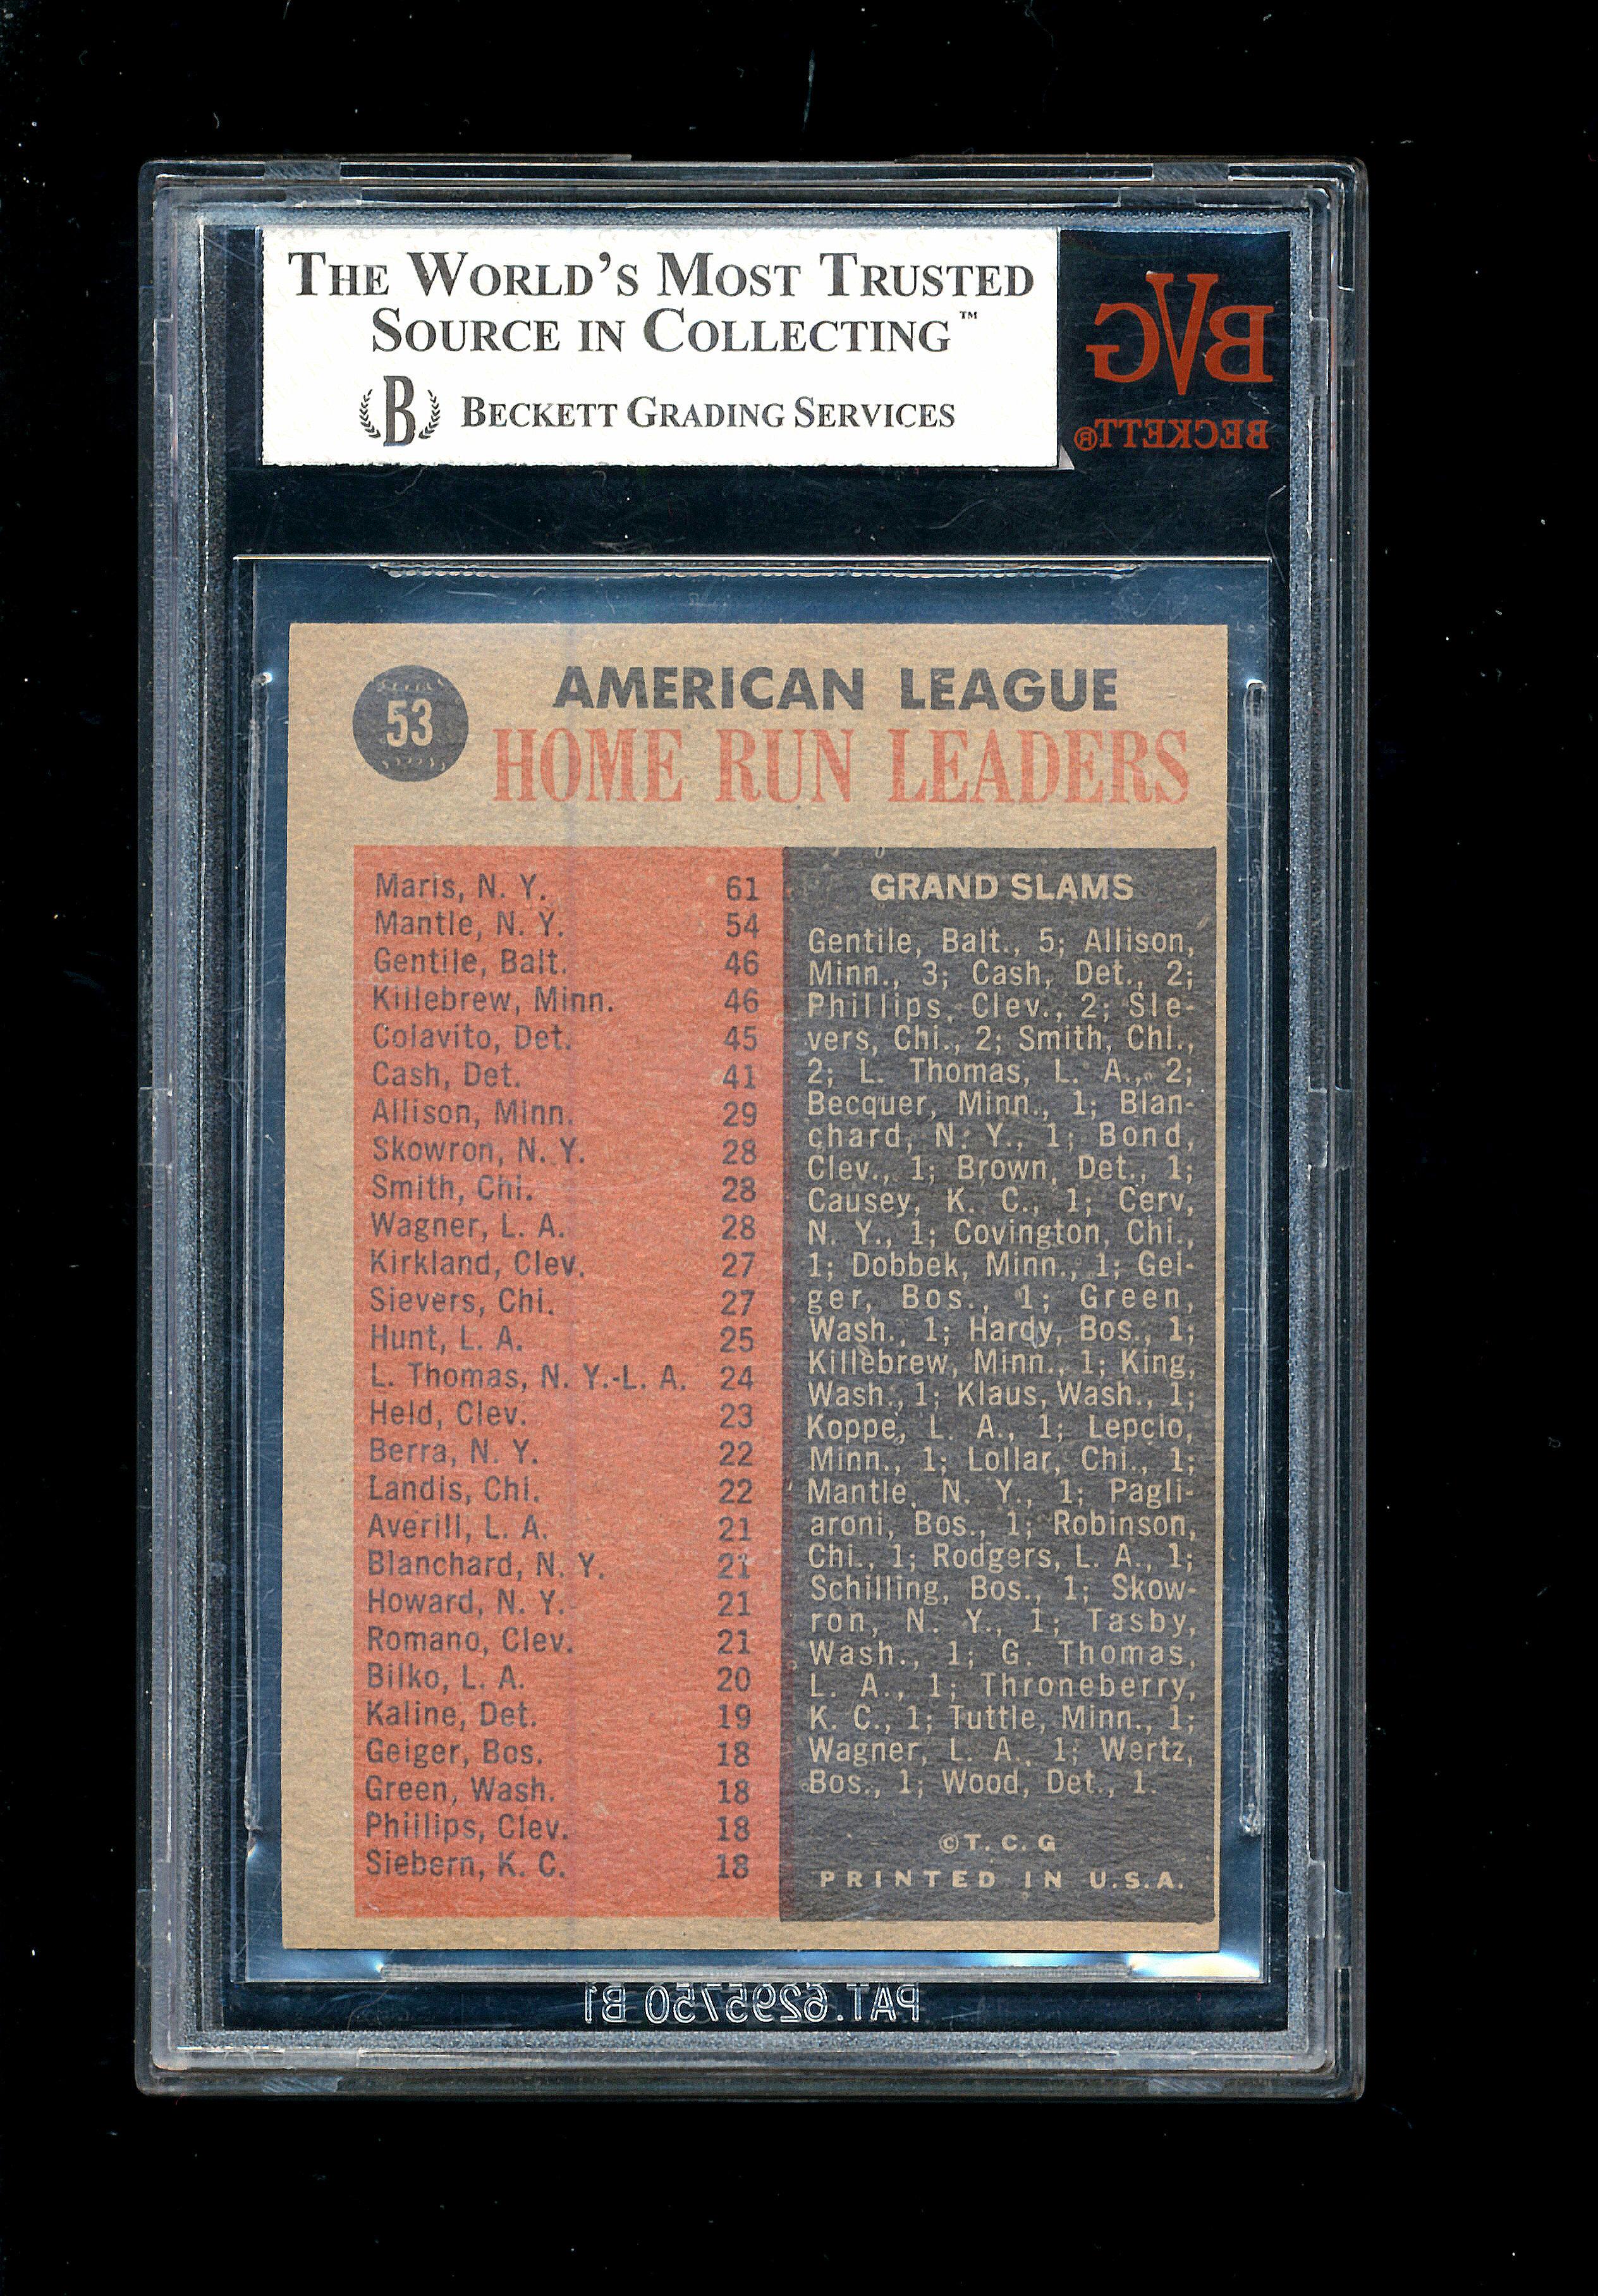 1962 Topps Baseball Card #53 American League 1961 Home Run Leaders Maris, M